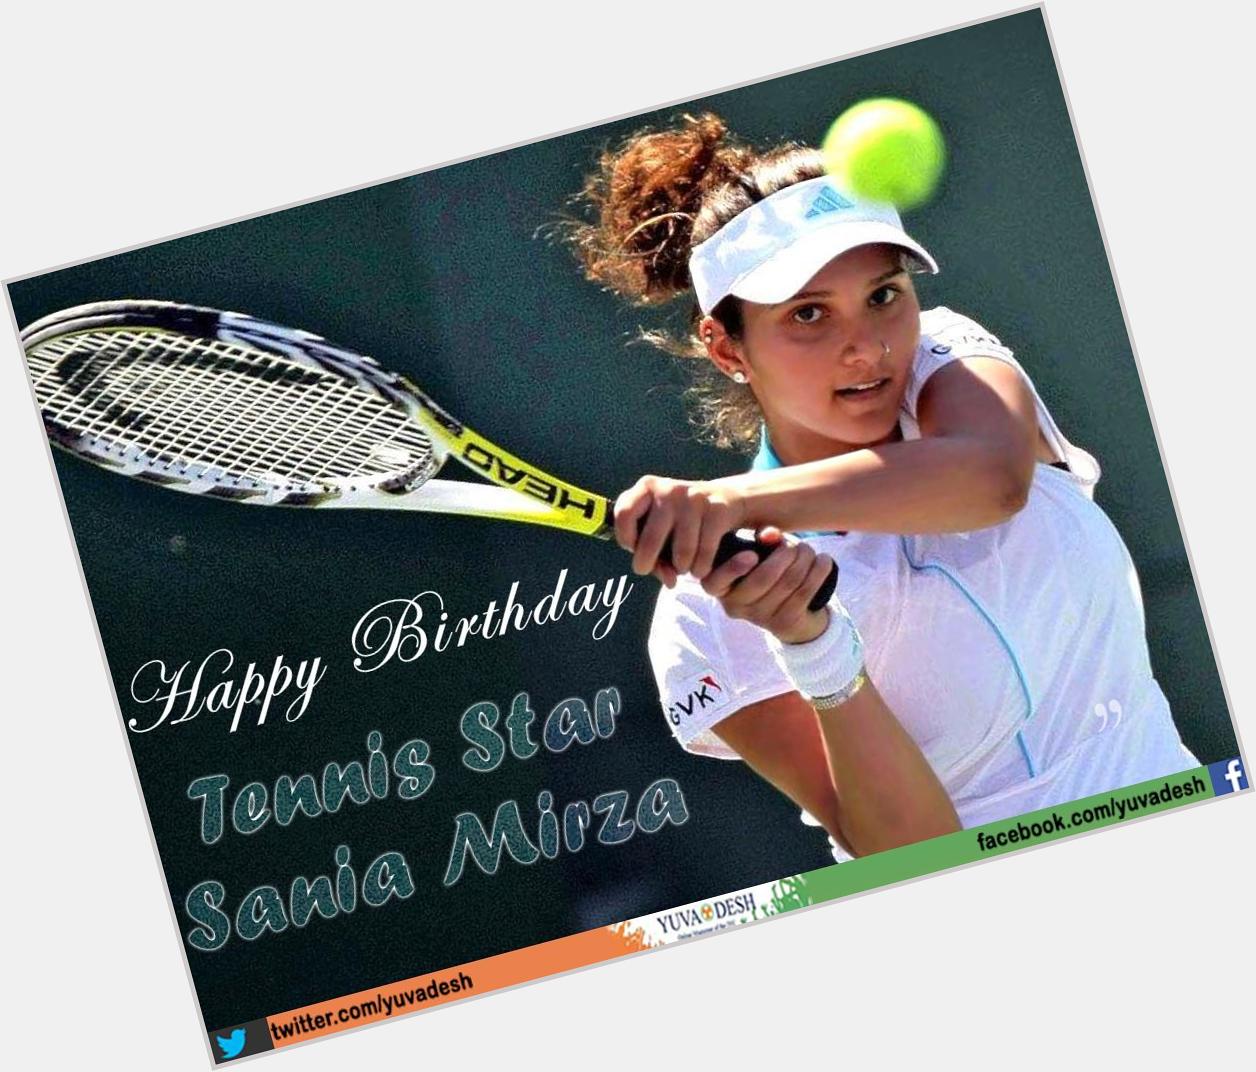 Wishing a very happy & a bright Birthday to Tennis star Sania Mirza. 